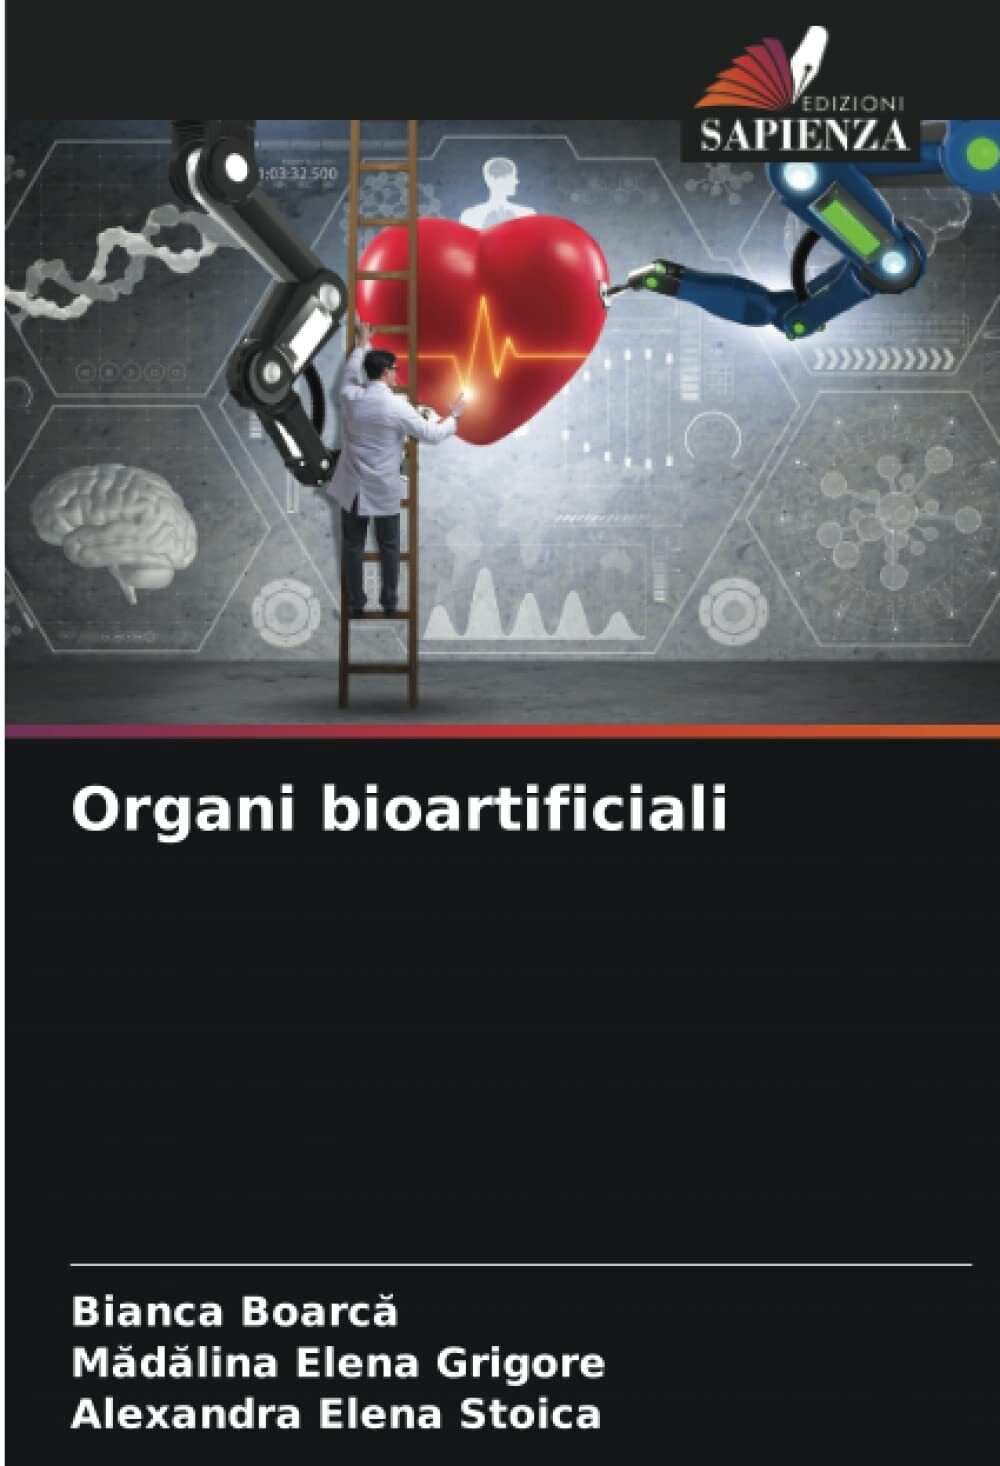 Organi bioartificiali - Bianca Boarca, Madalina Elena Grigore - Sapienza, 2021